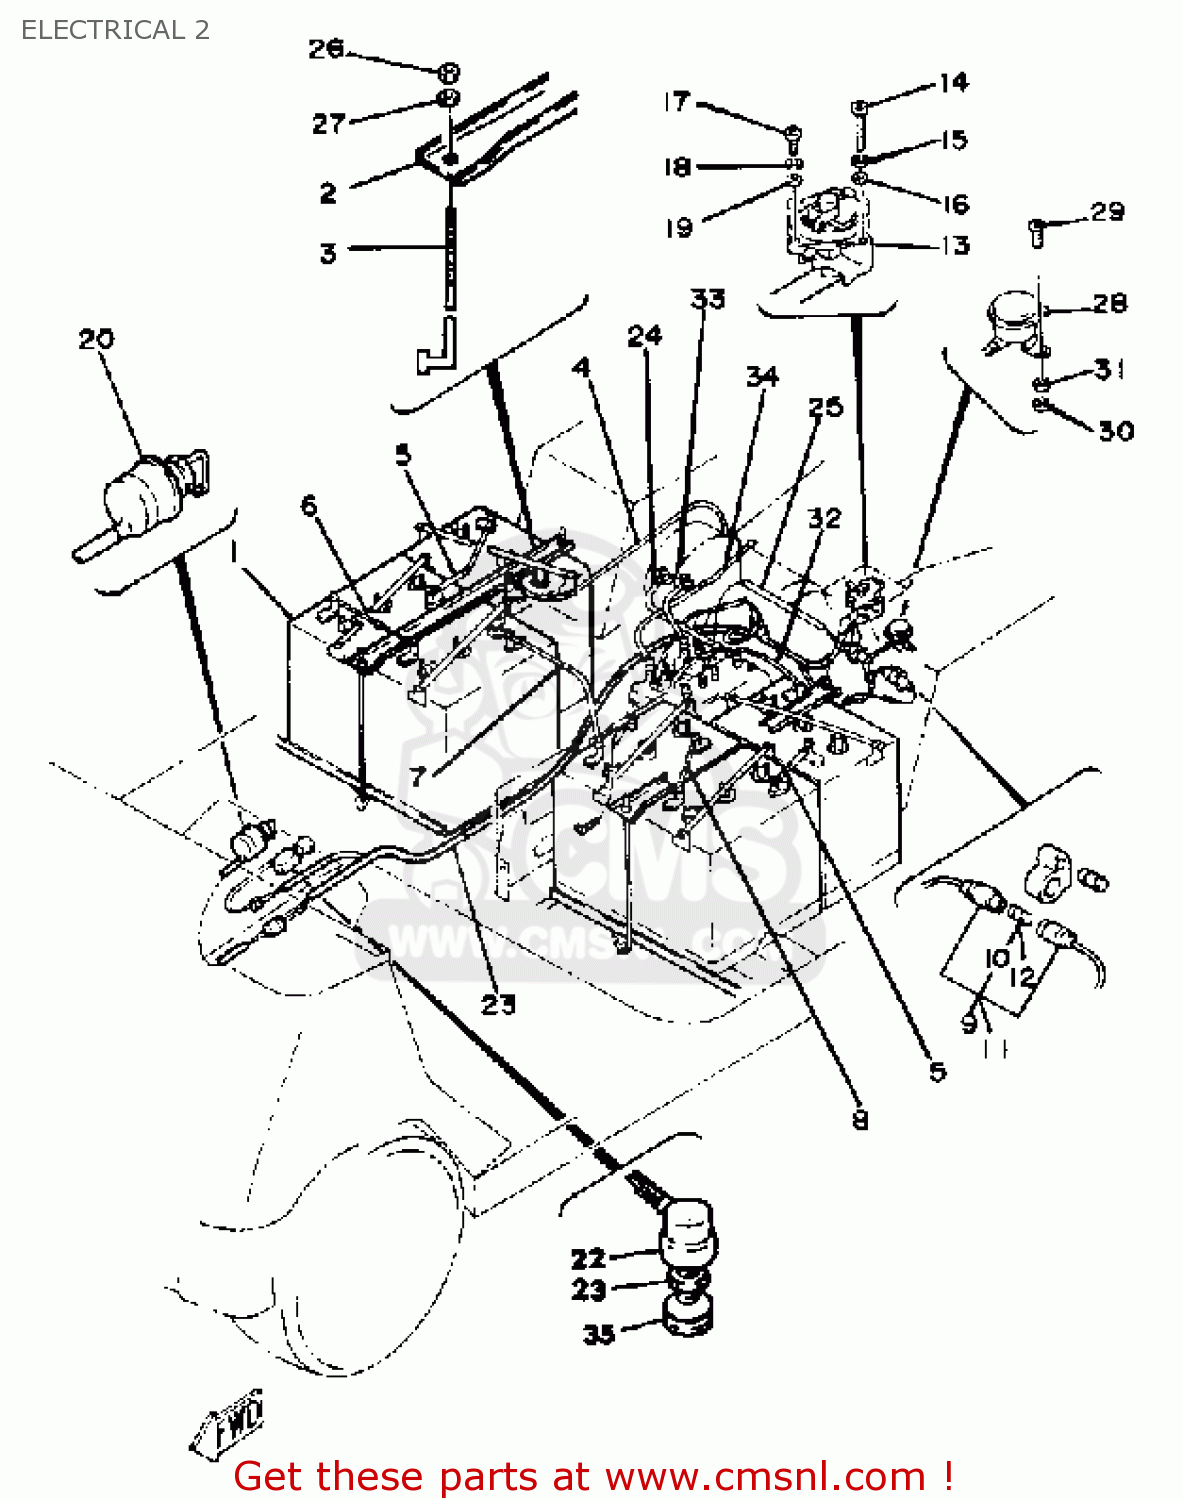 yamaha g1 electric golf cart wiring diagram